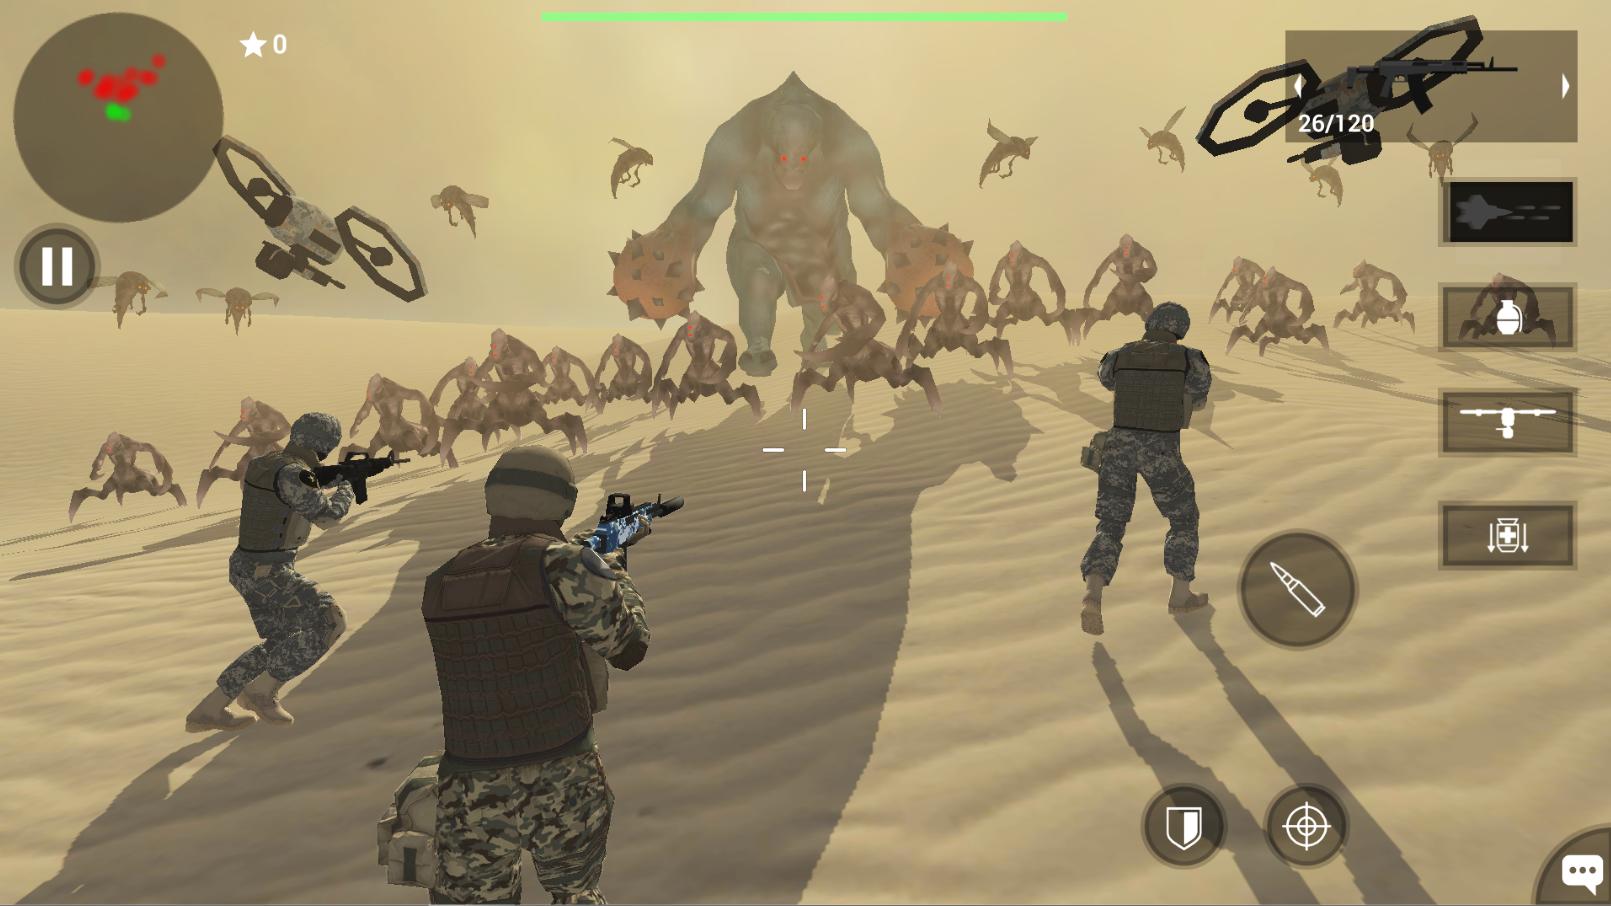 Earth Protect Squad Third Person Shooting Game 2.00.32b Screenshot 1